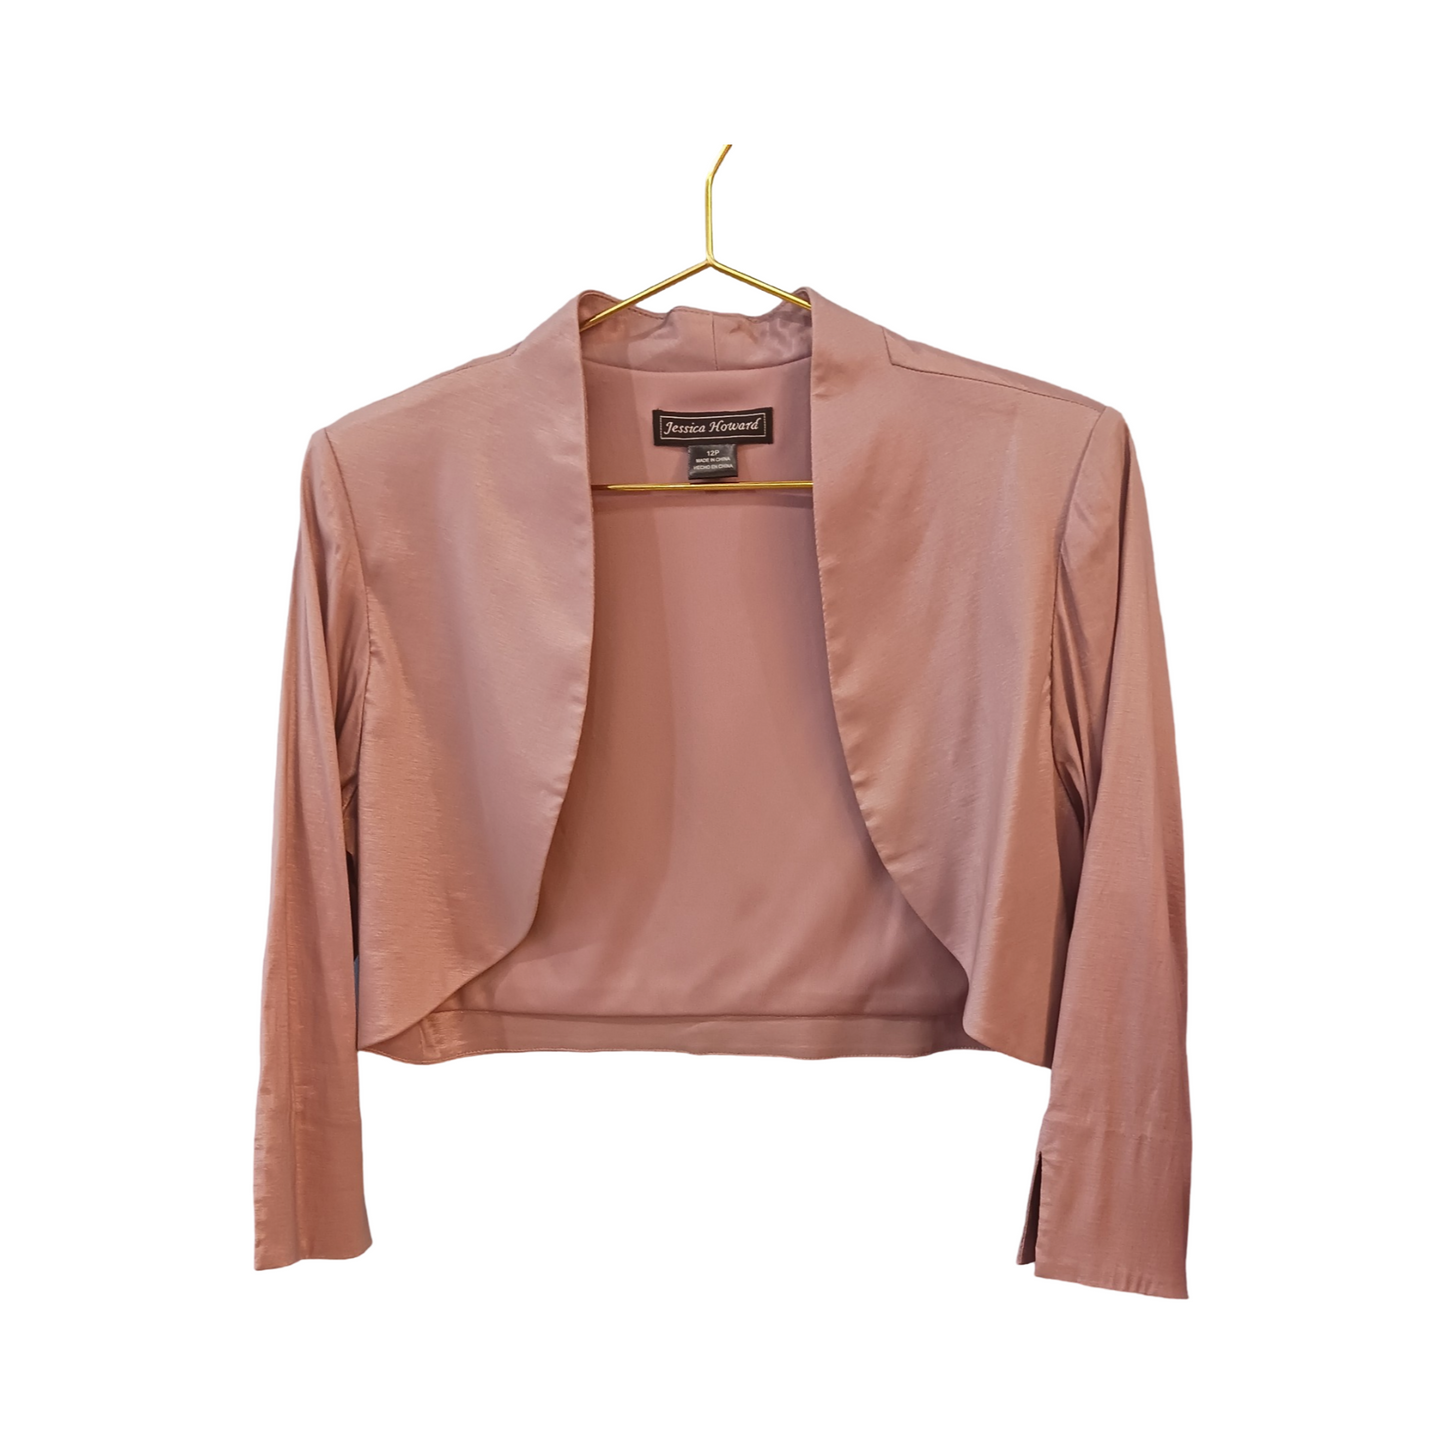 Jessica Howard Shimmery Pink Bolero Jacket, Size 12P